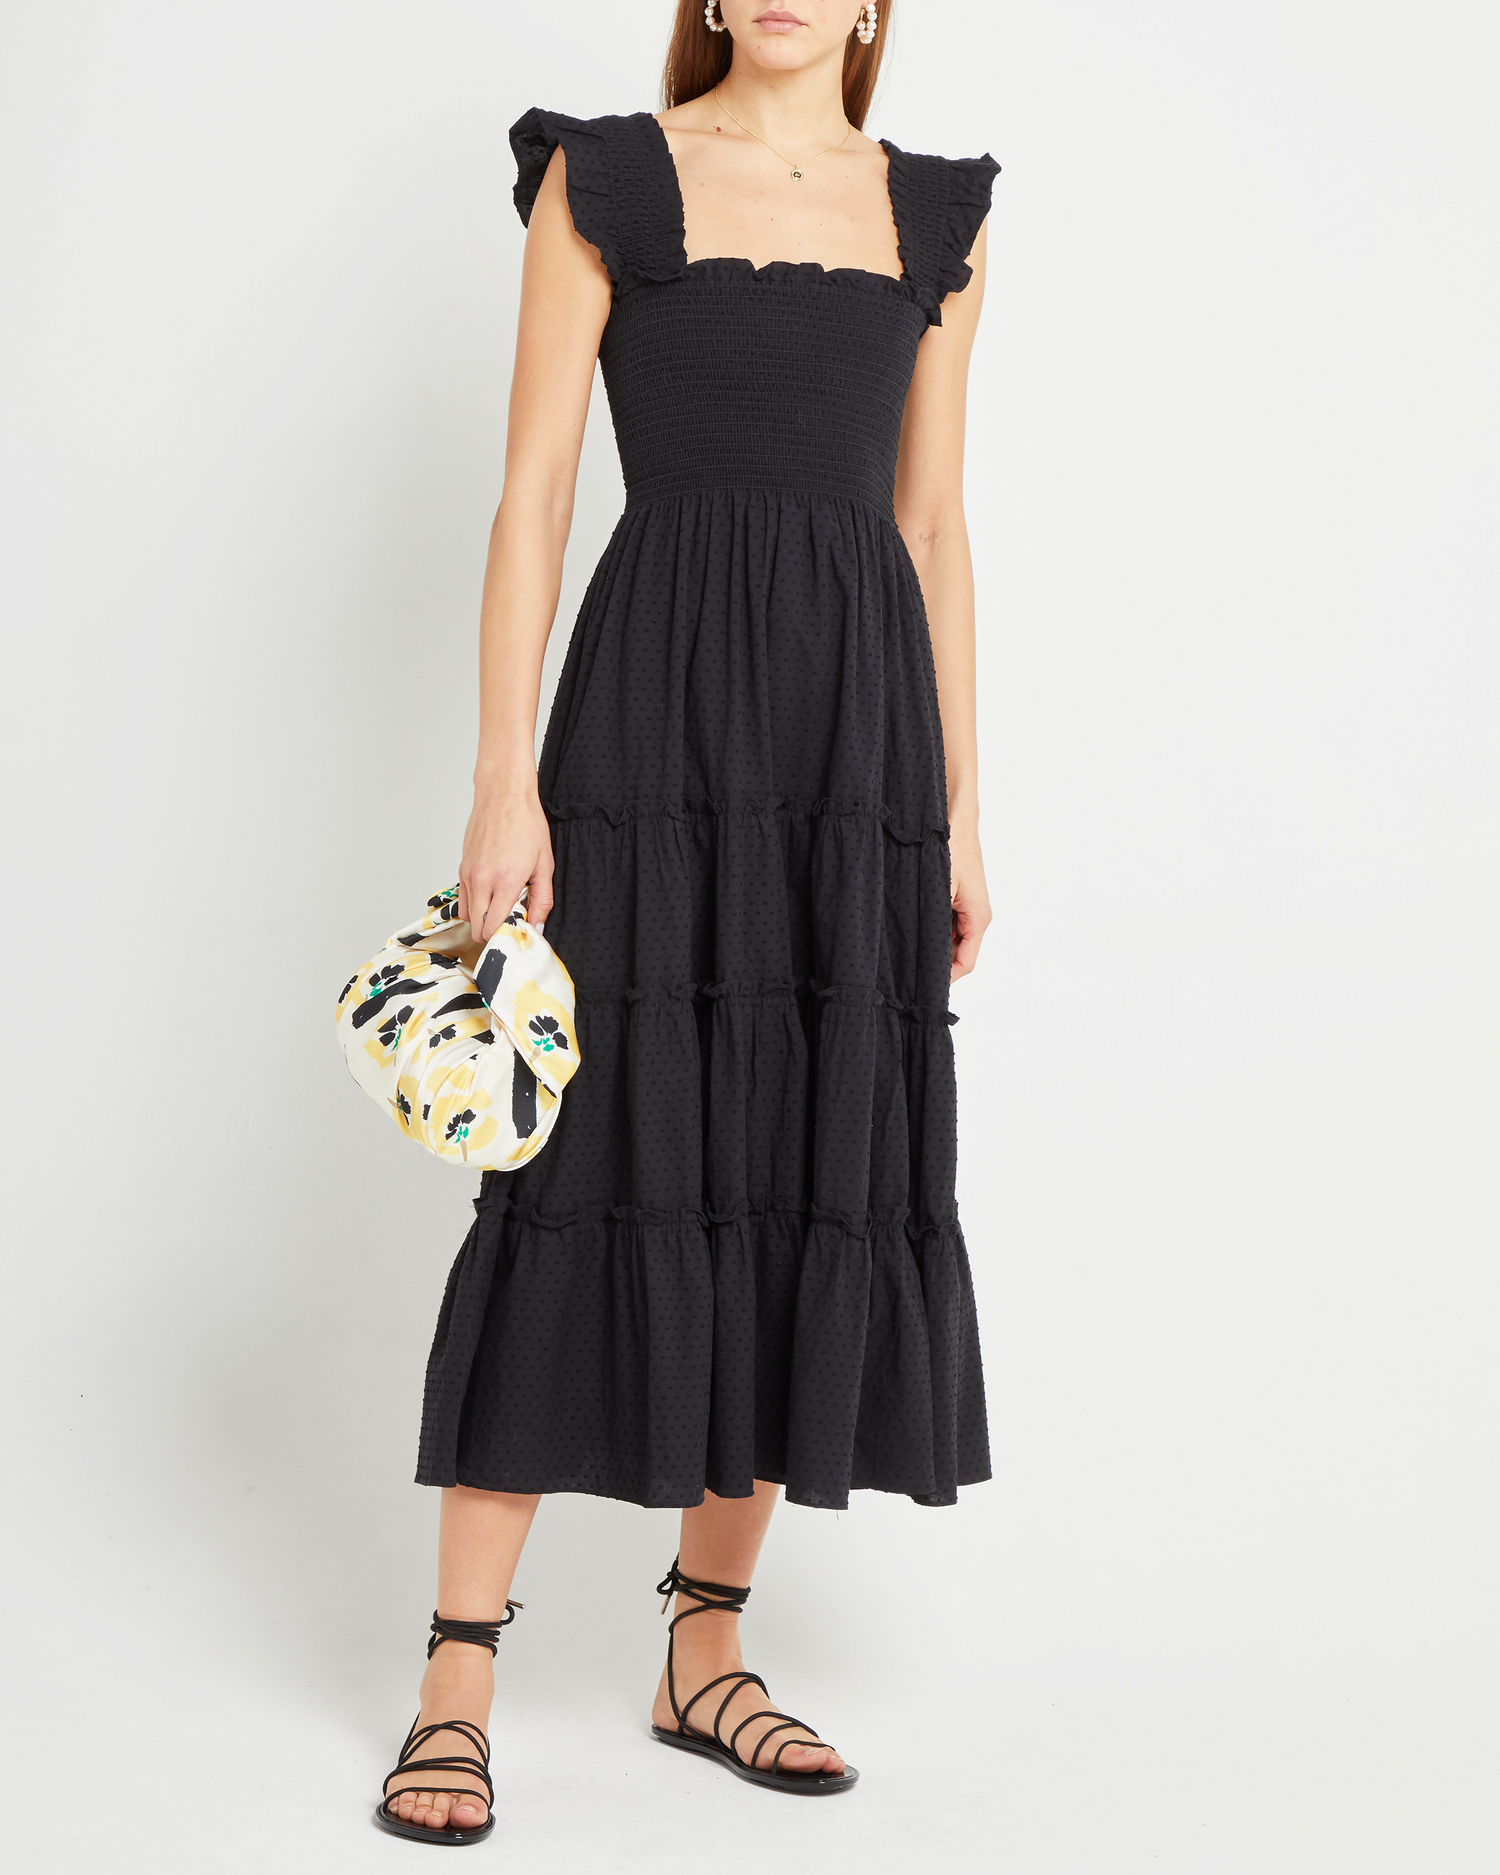 Third image of Calypso Maxi Dress, a black maxi dress, swiss dot material, smocked bodice, ruffles cap sleeves 